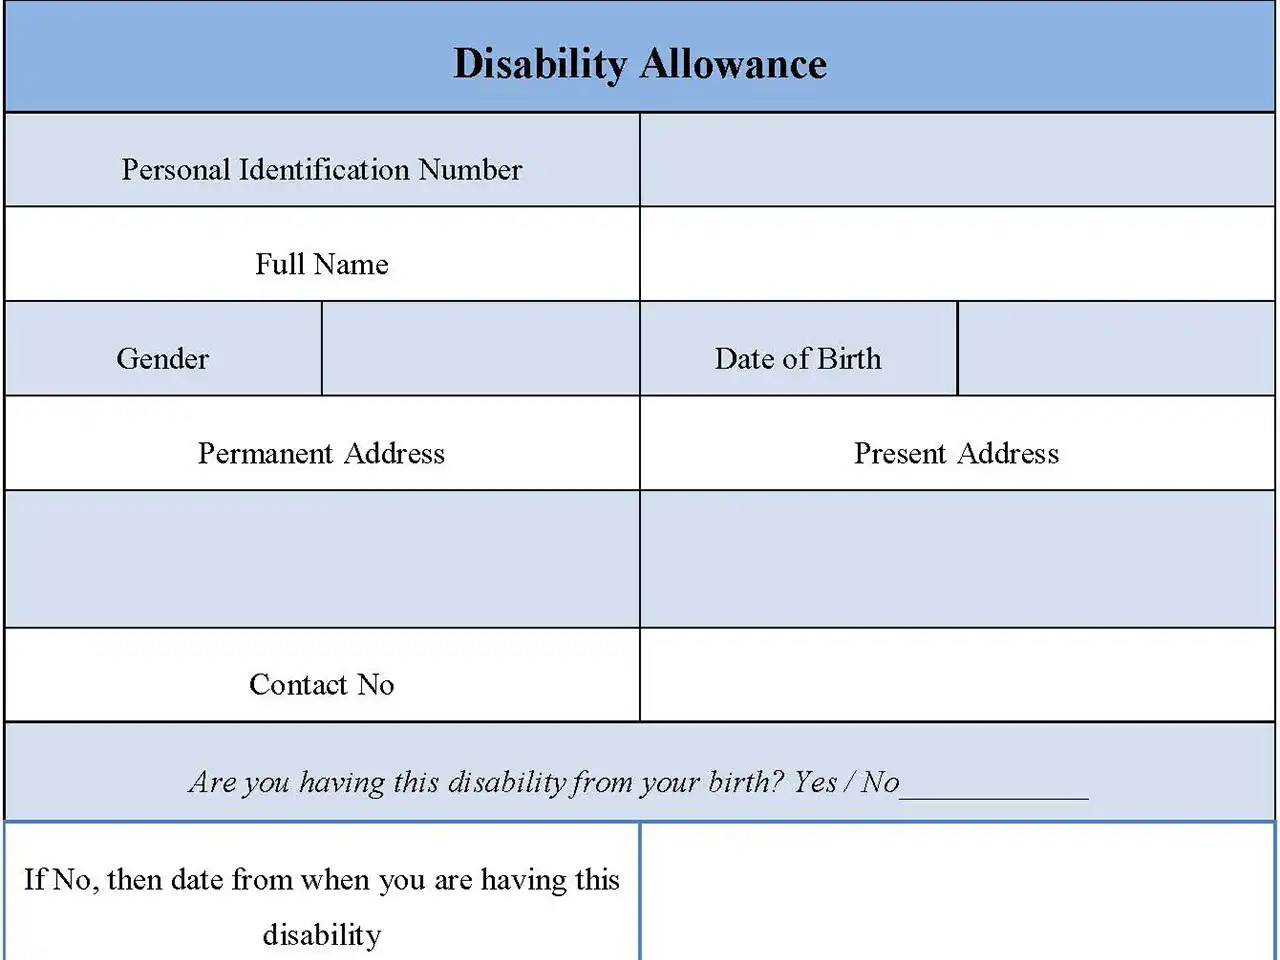 Disability allowance form